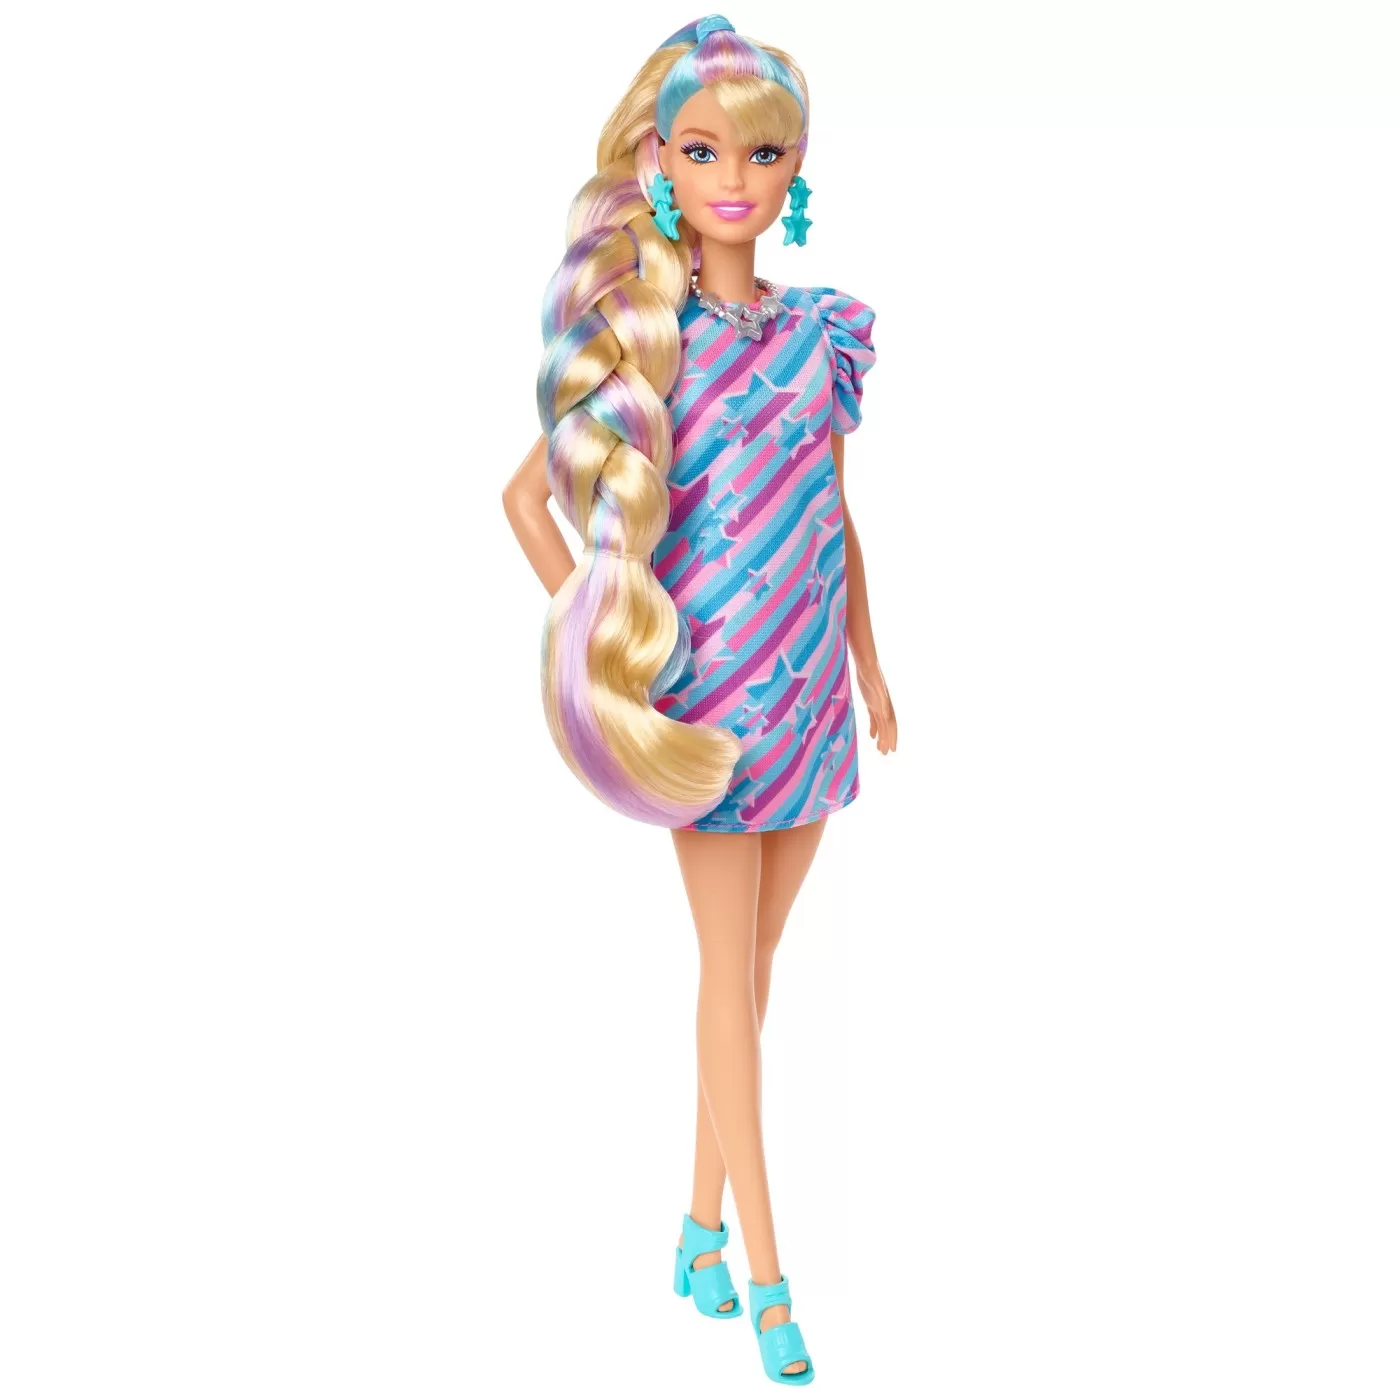 Papusa Barbie Totally Hair, Blonda, Barbie